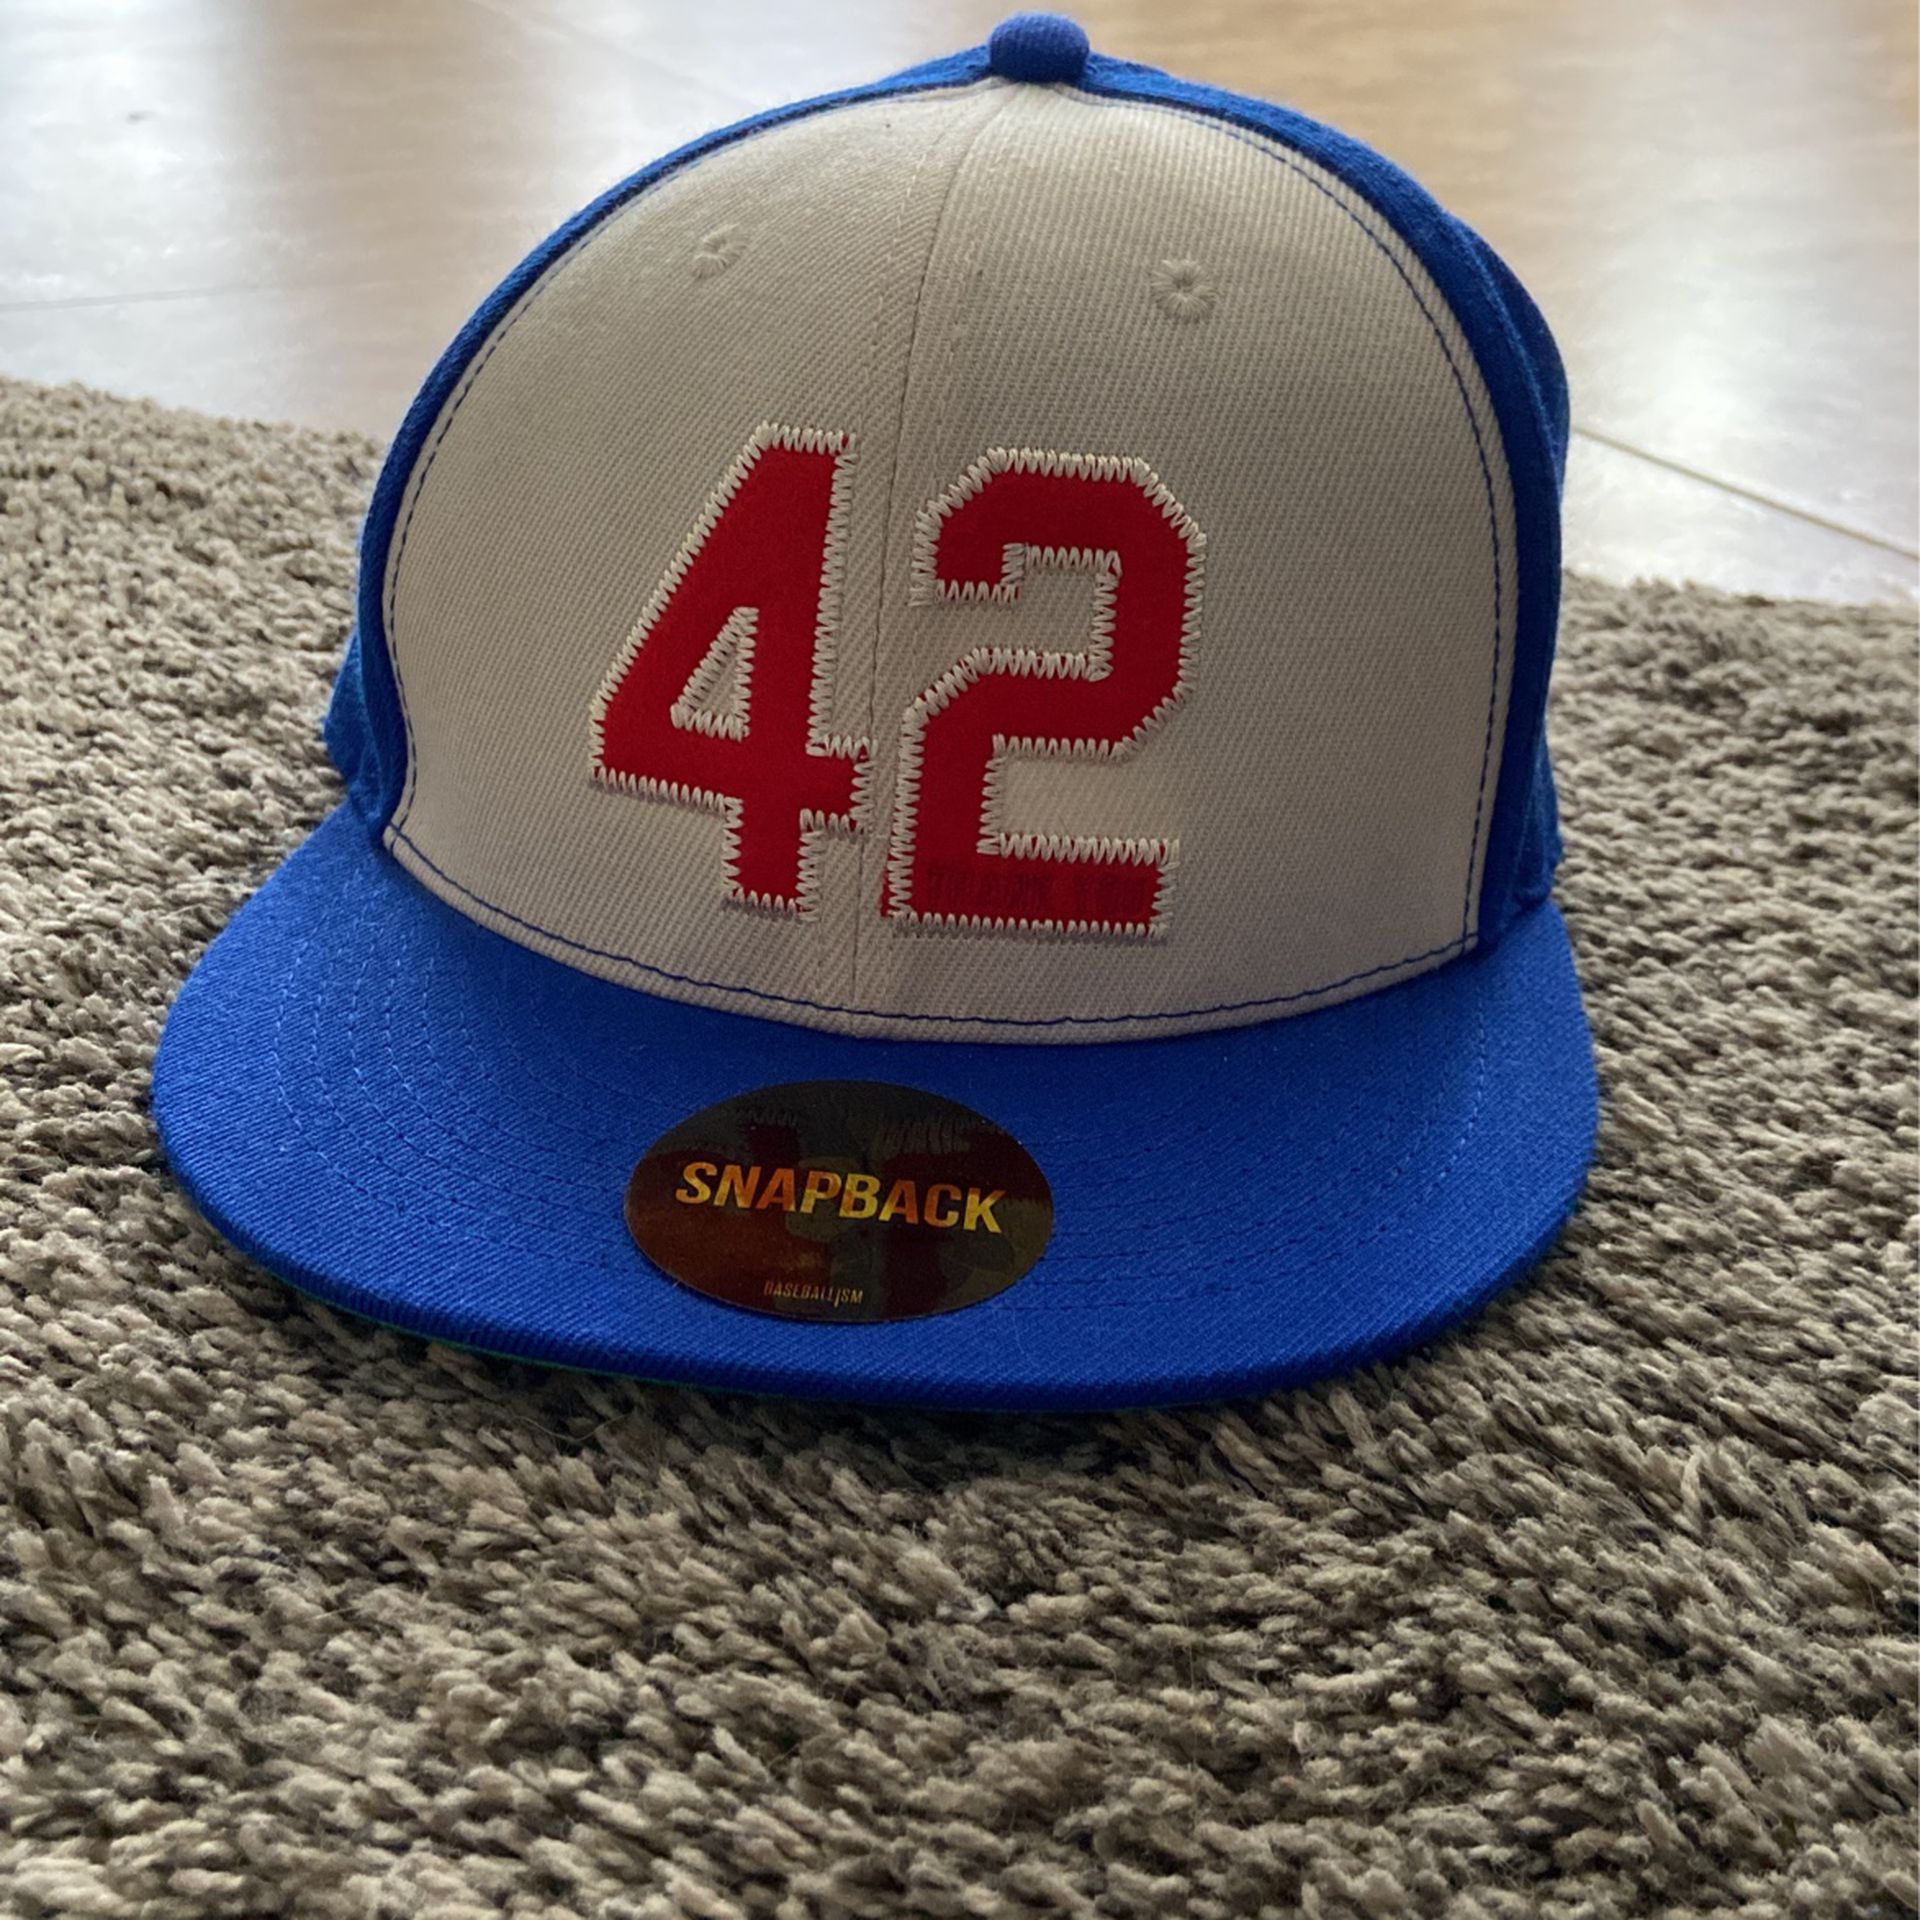 Baseballism 42 Snapback hat